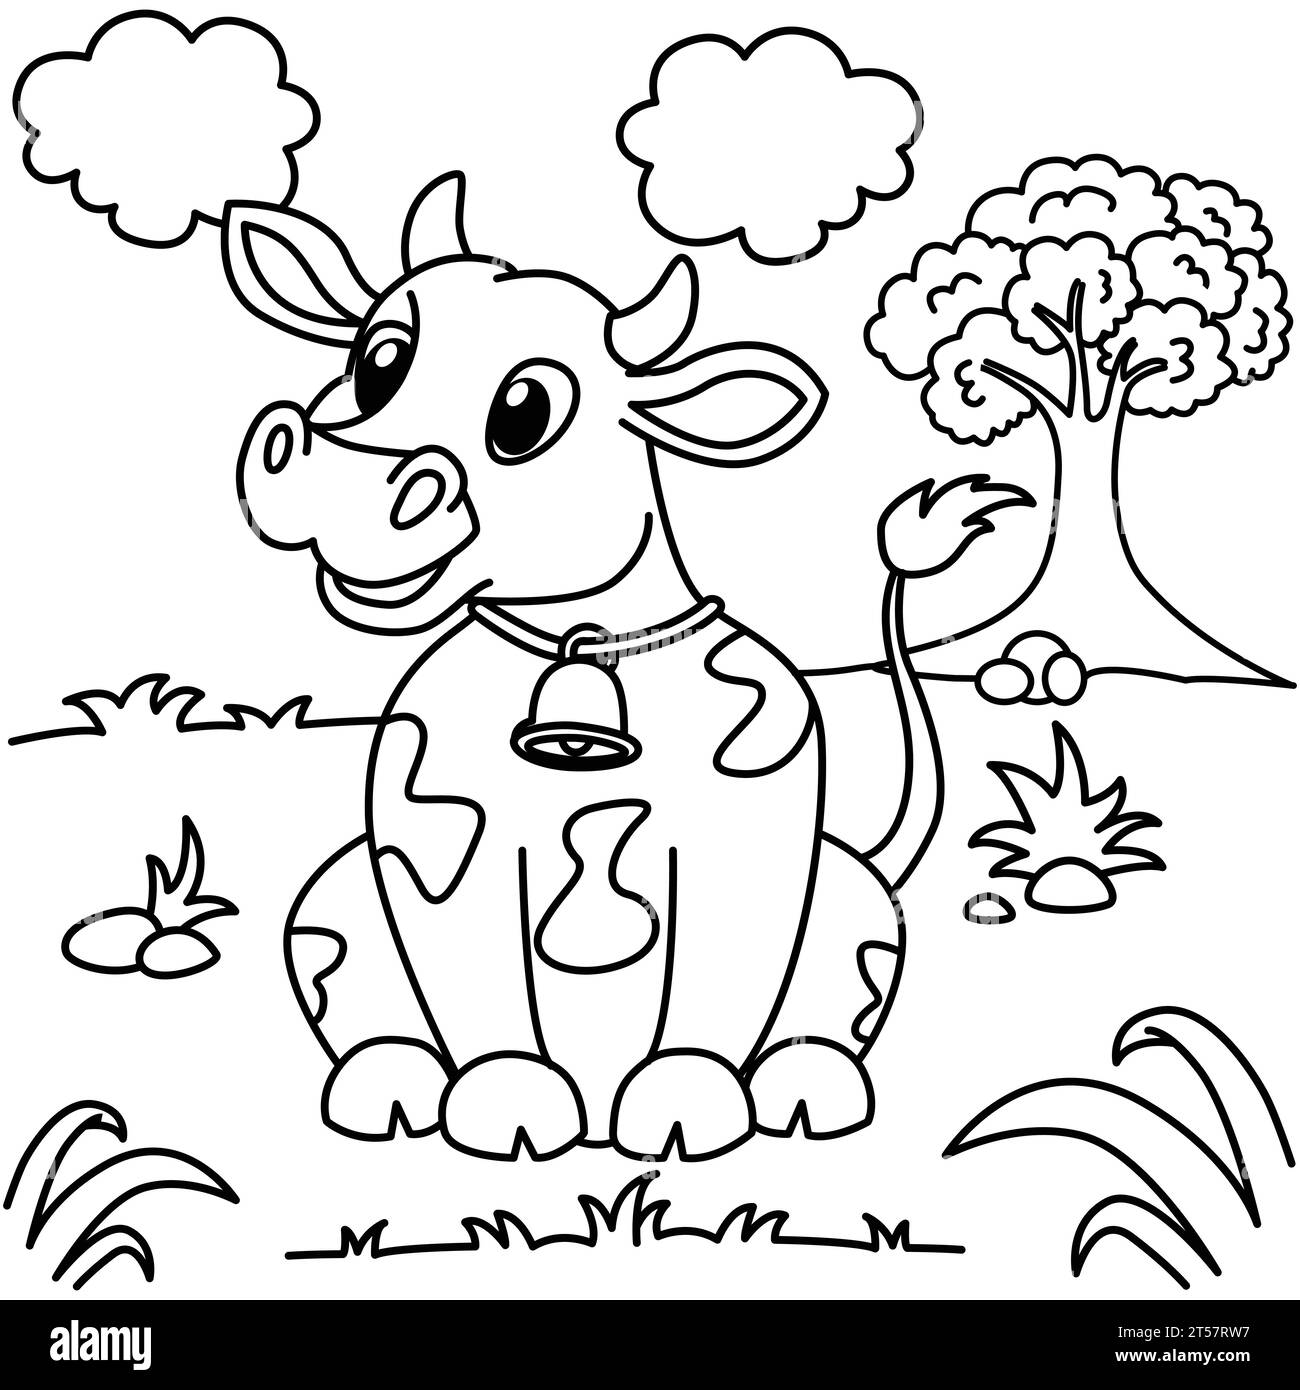 Funny cow cartoon coloring page Royalty Free Vector Image Stock Vector ...